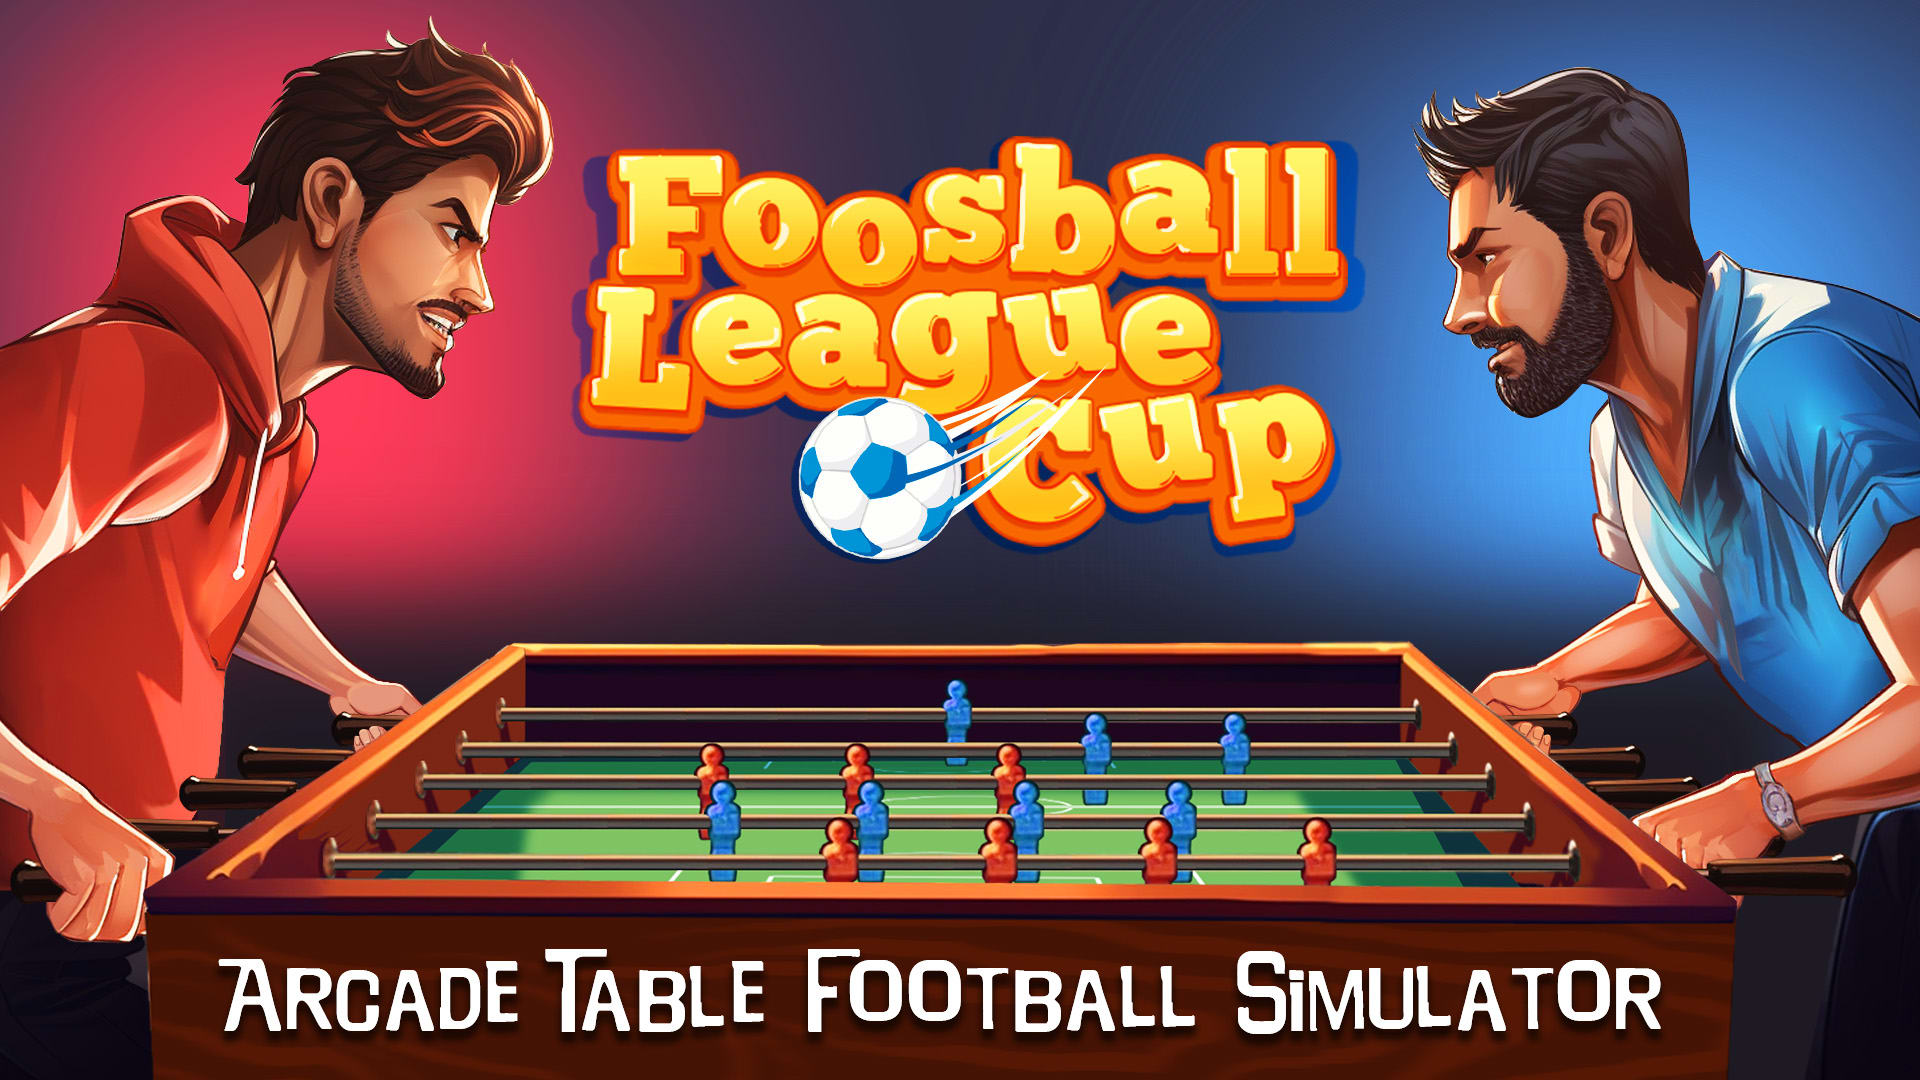 Foosball League Cup: Arcade Table Football Simulator